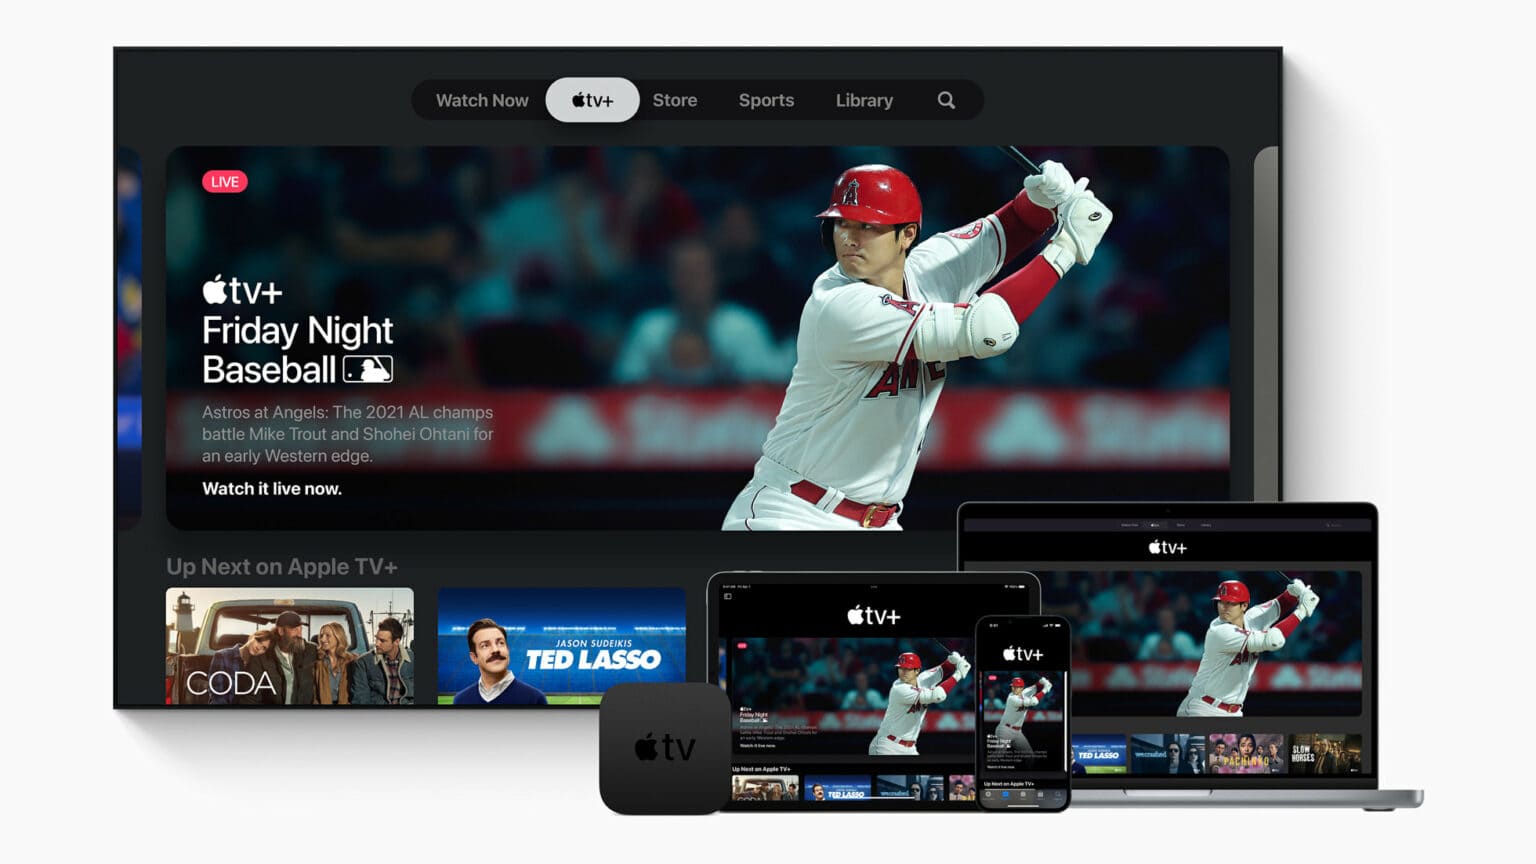 Friday Night Baseball starts Friday on Apple TV+.